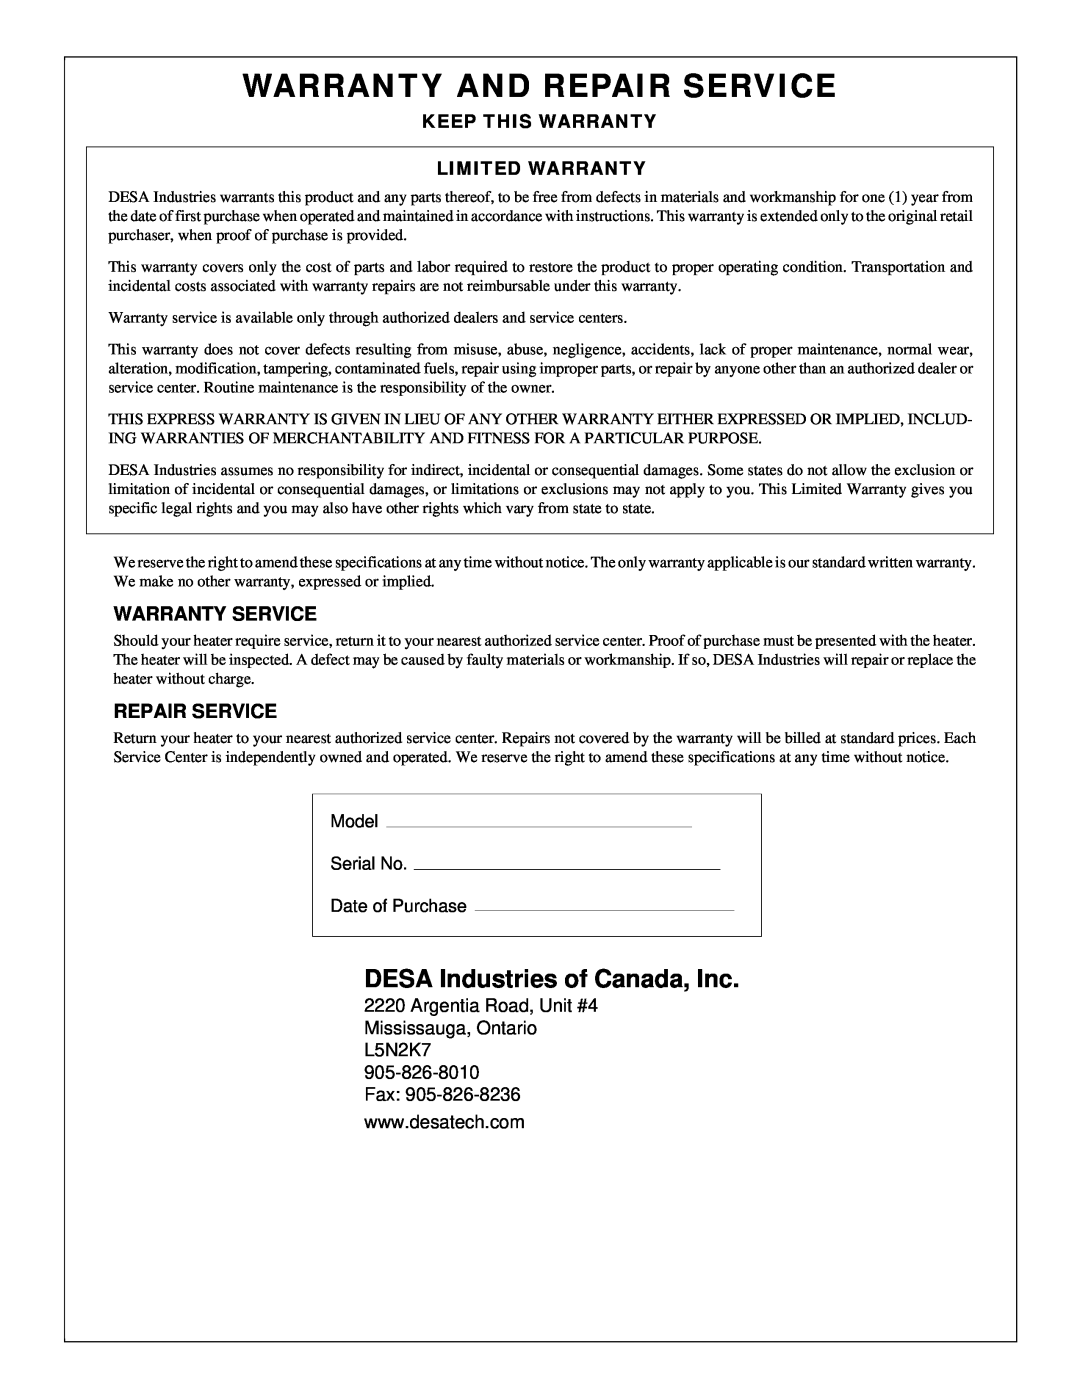 Desa RCLP155B owner manual Warranty And Repair Service, DESA Industries of Canada, Inc, Warranty Service 